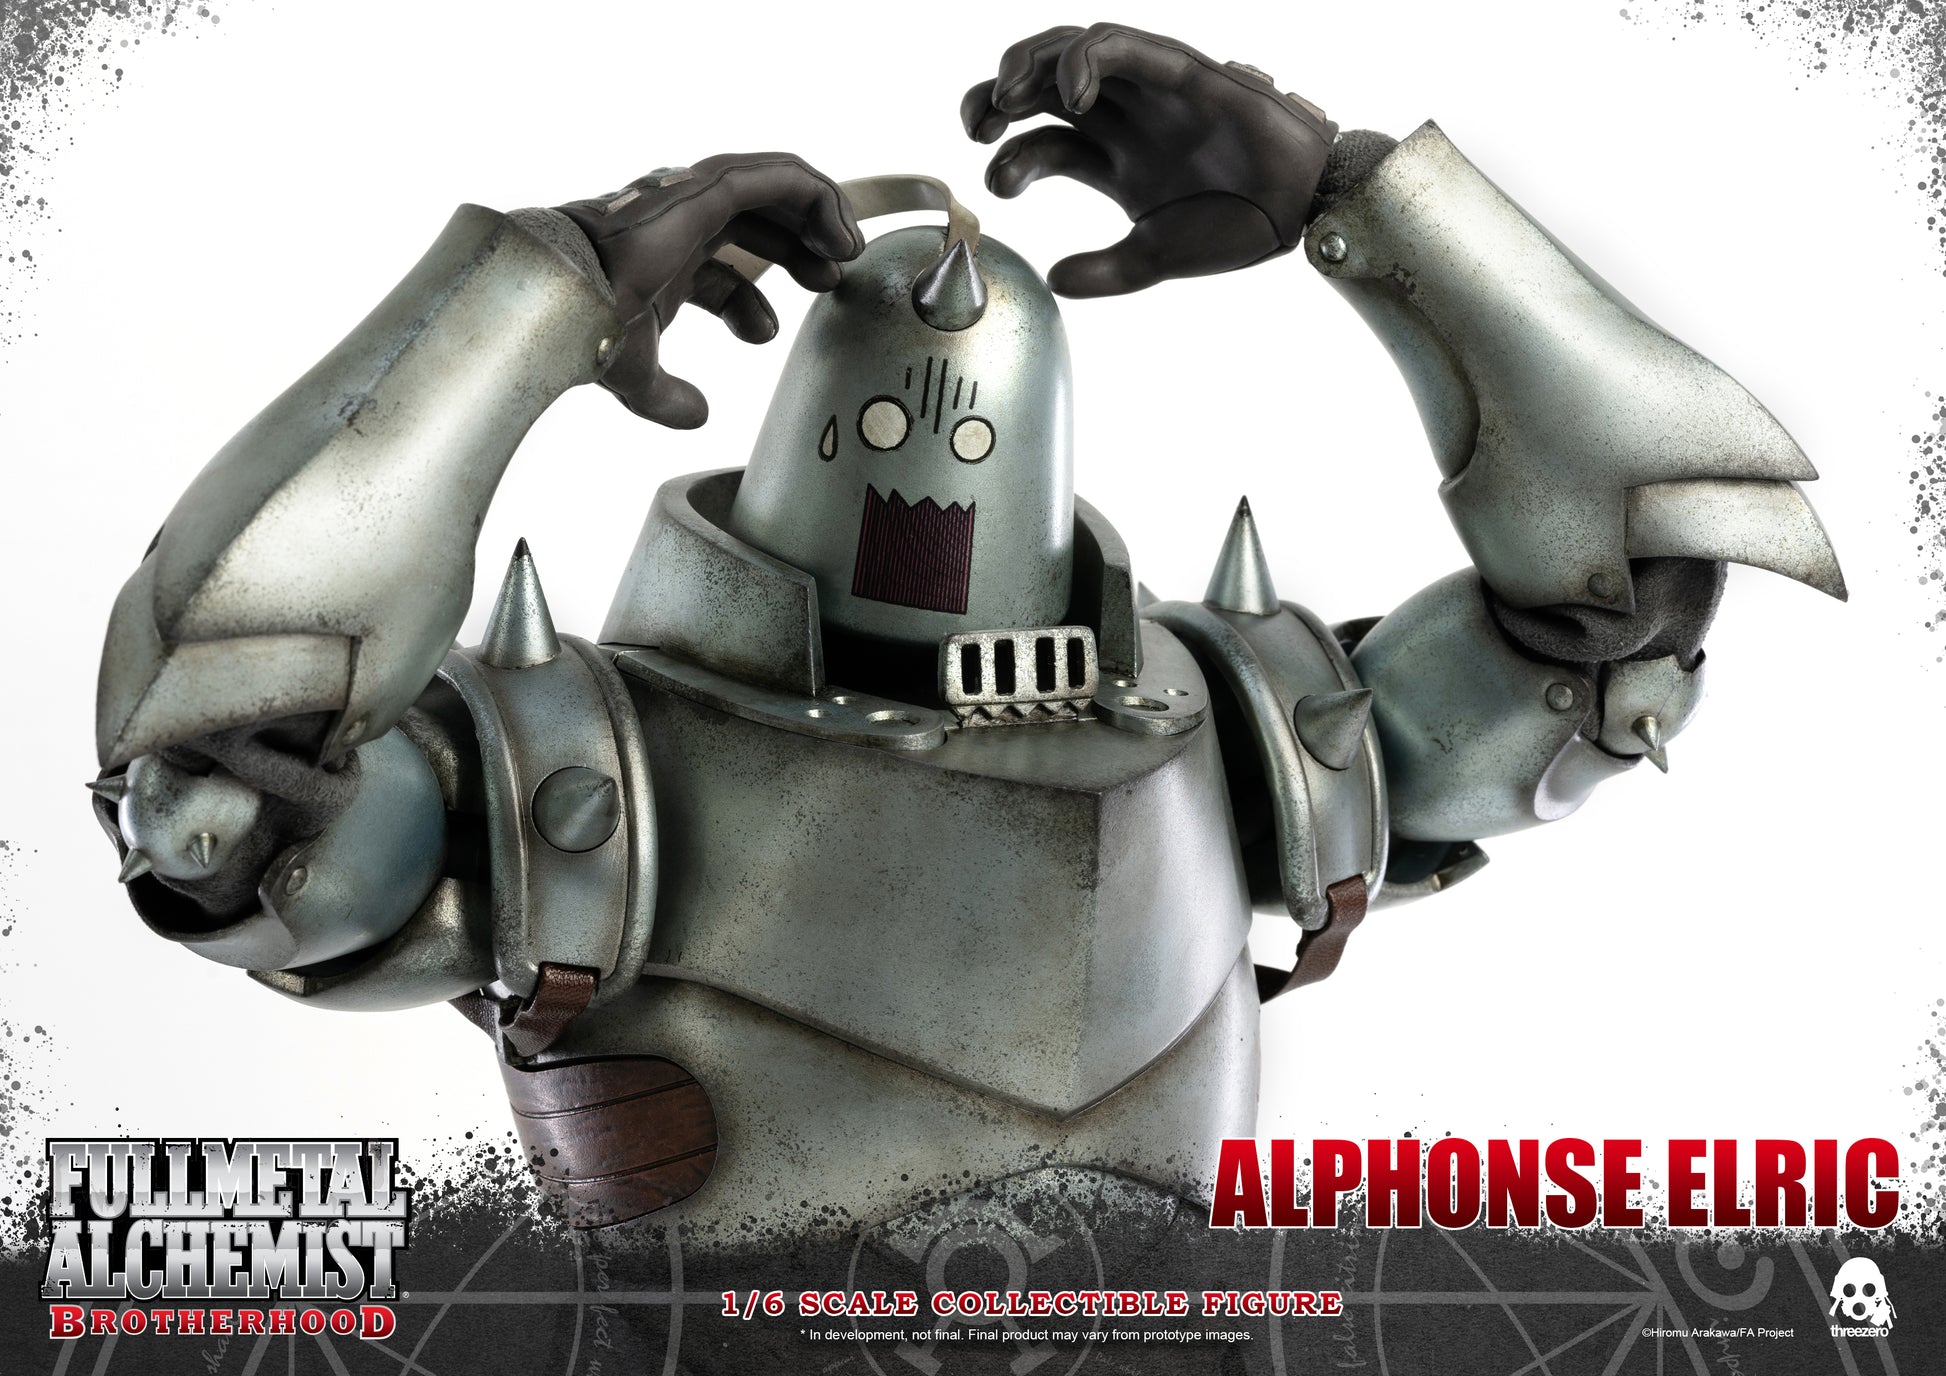 Fullmetal Alchemist-Edward & Alphonse by SenseiSuper